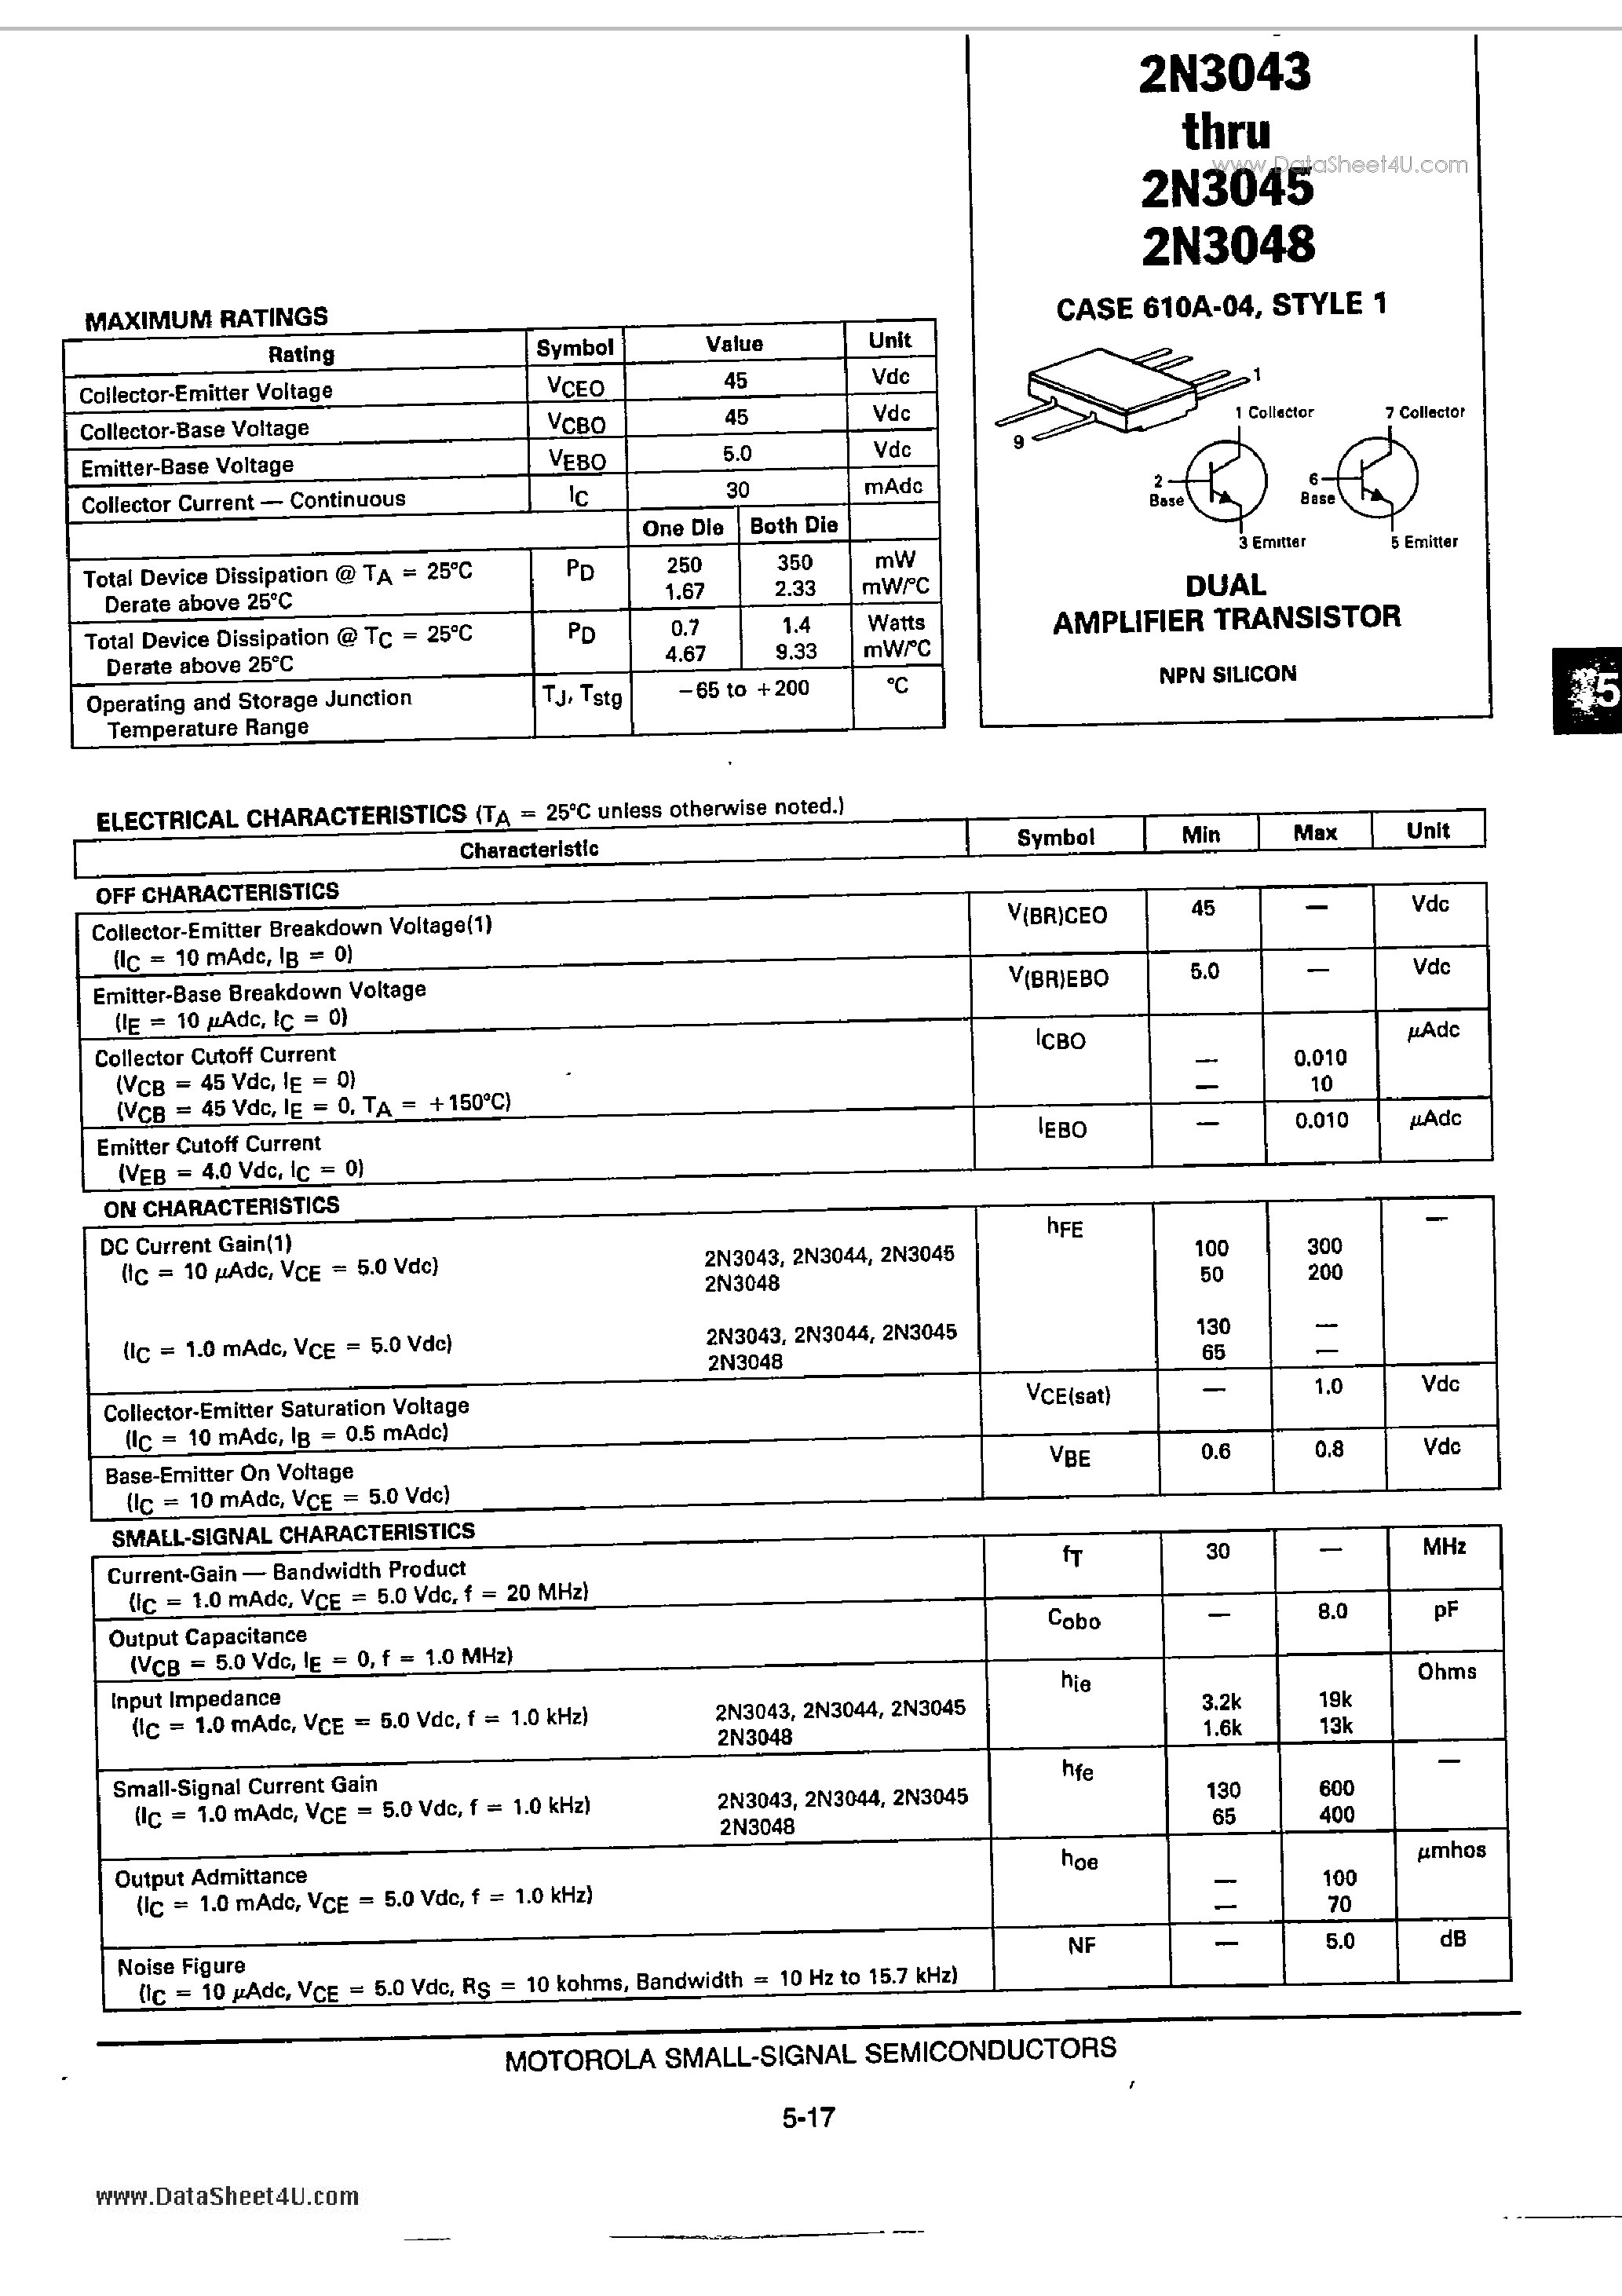 Datasheet 2N3043 - (2N3043 - 2N3048)DUAL AMPLIFIER TRANSISTOR page 1